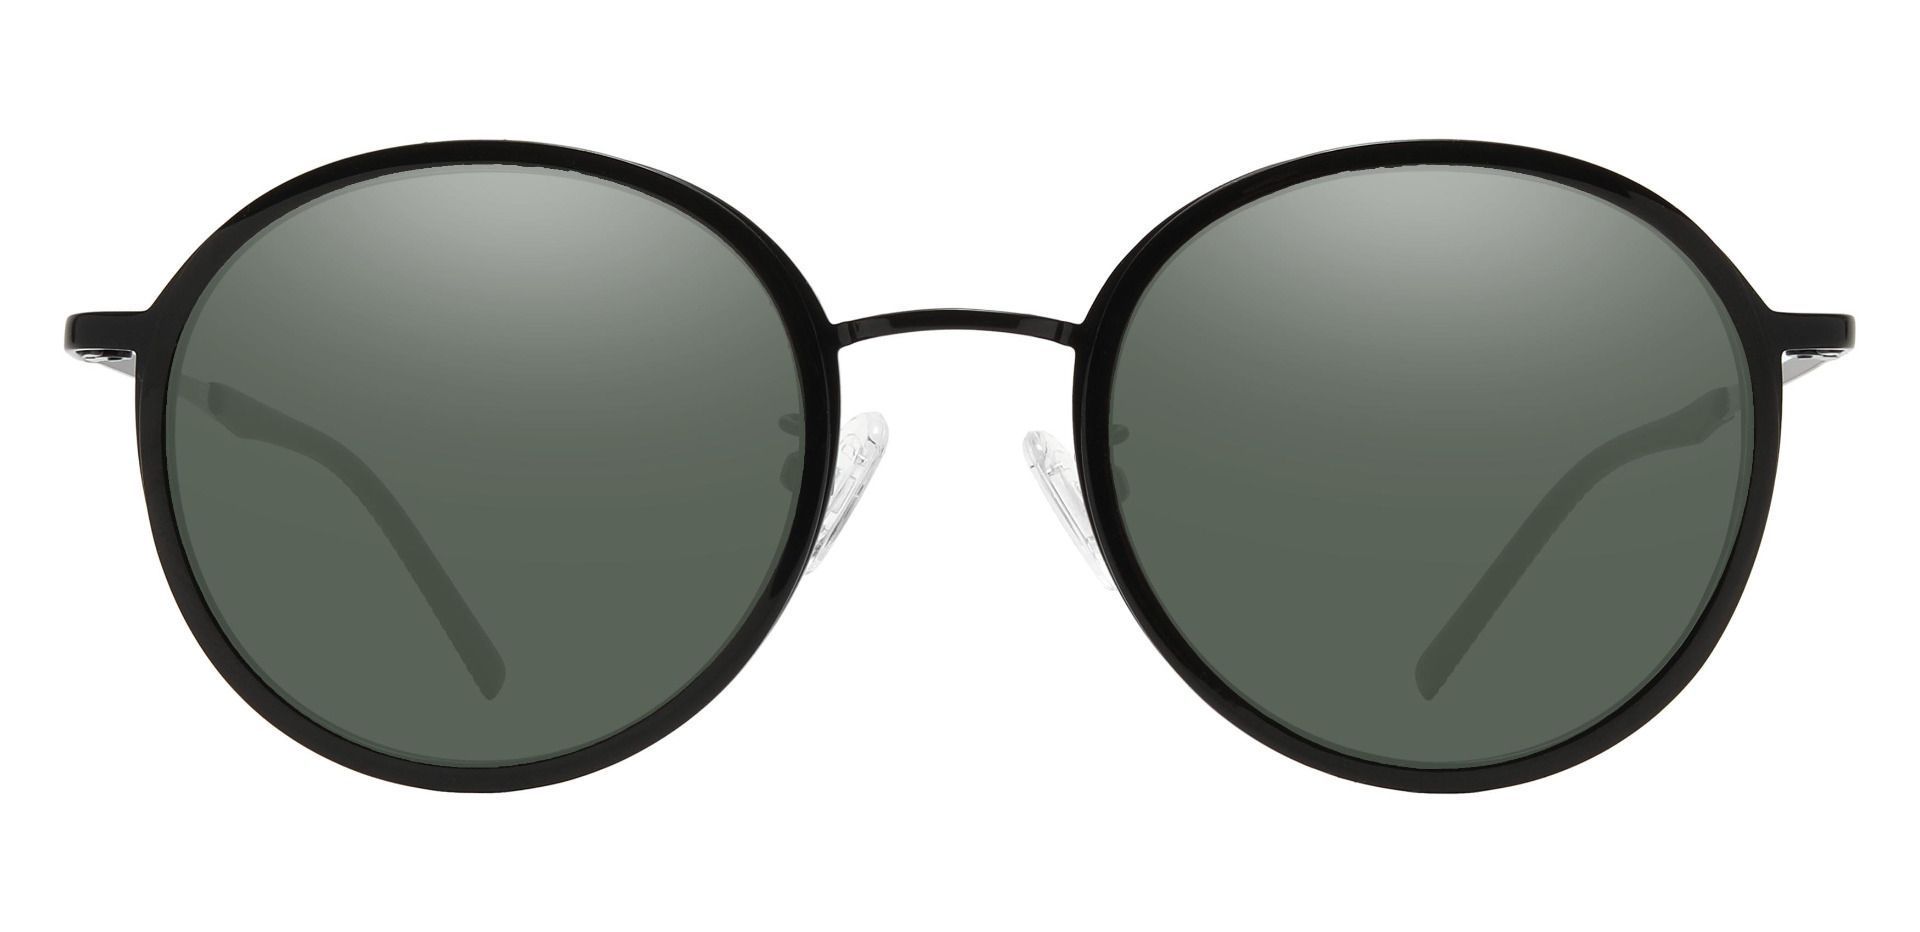 Brunswick Round Prescription Sunglasses - Black Frame With Green Lenses